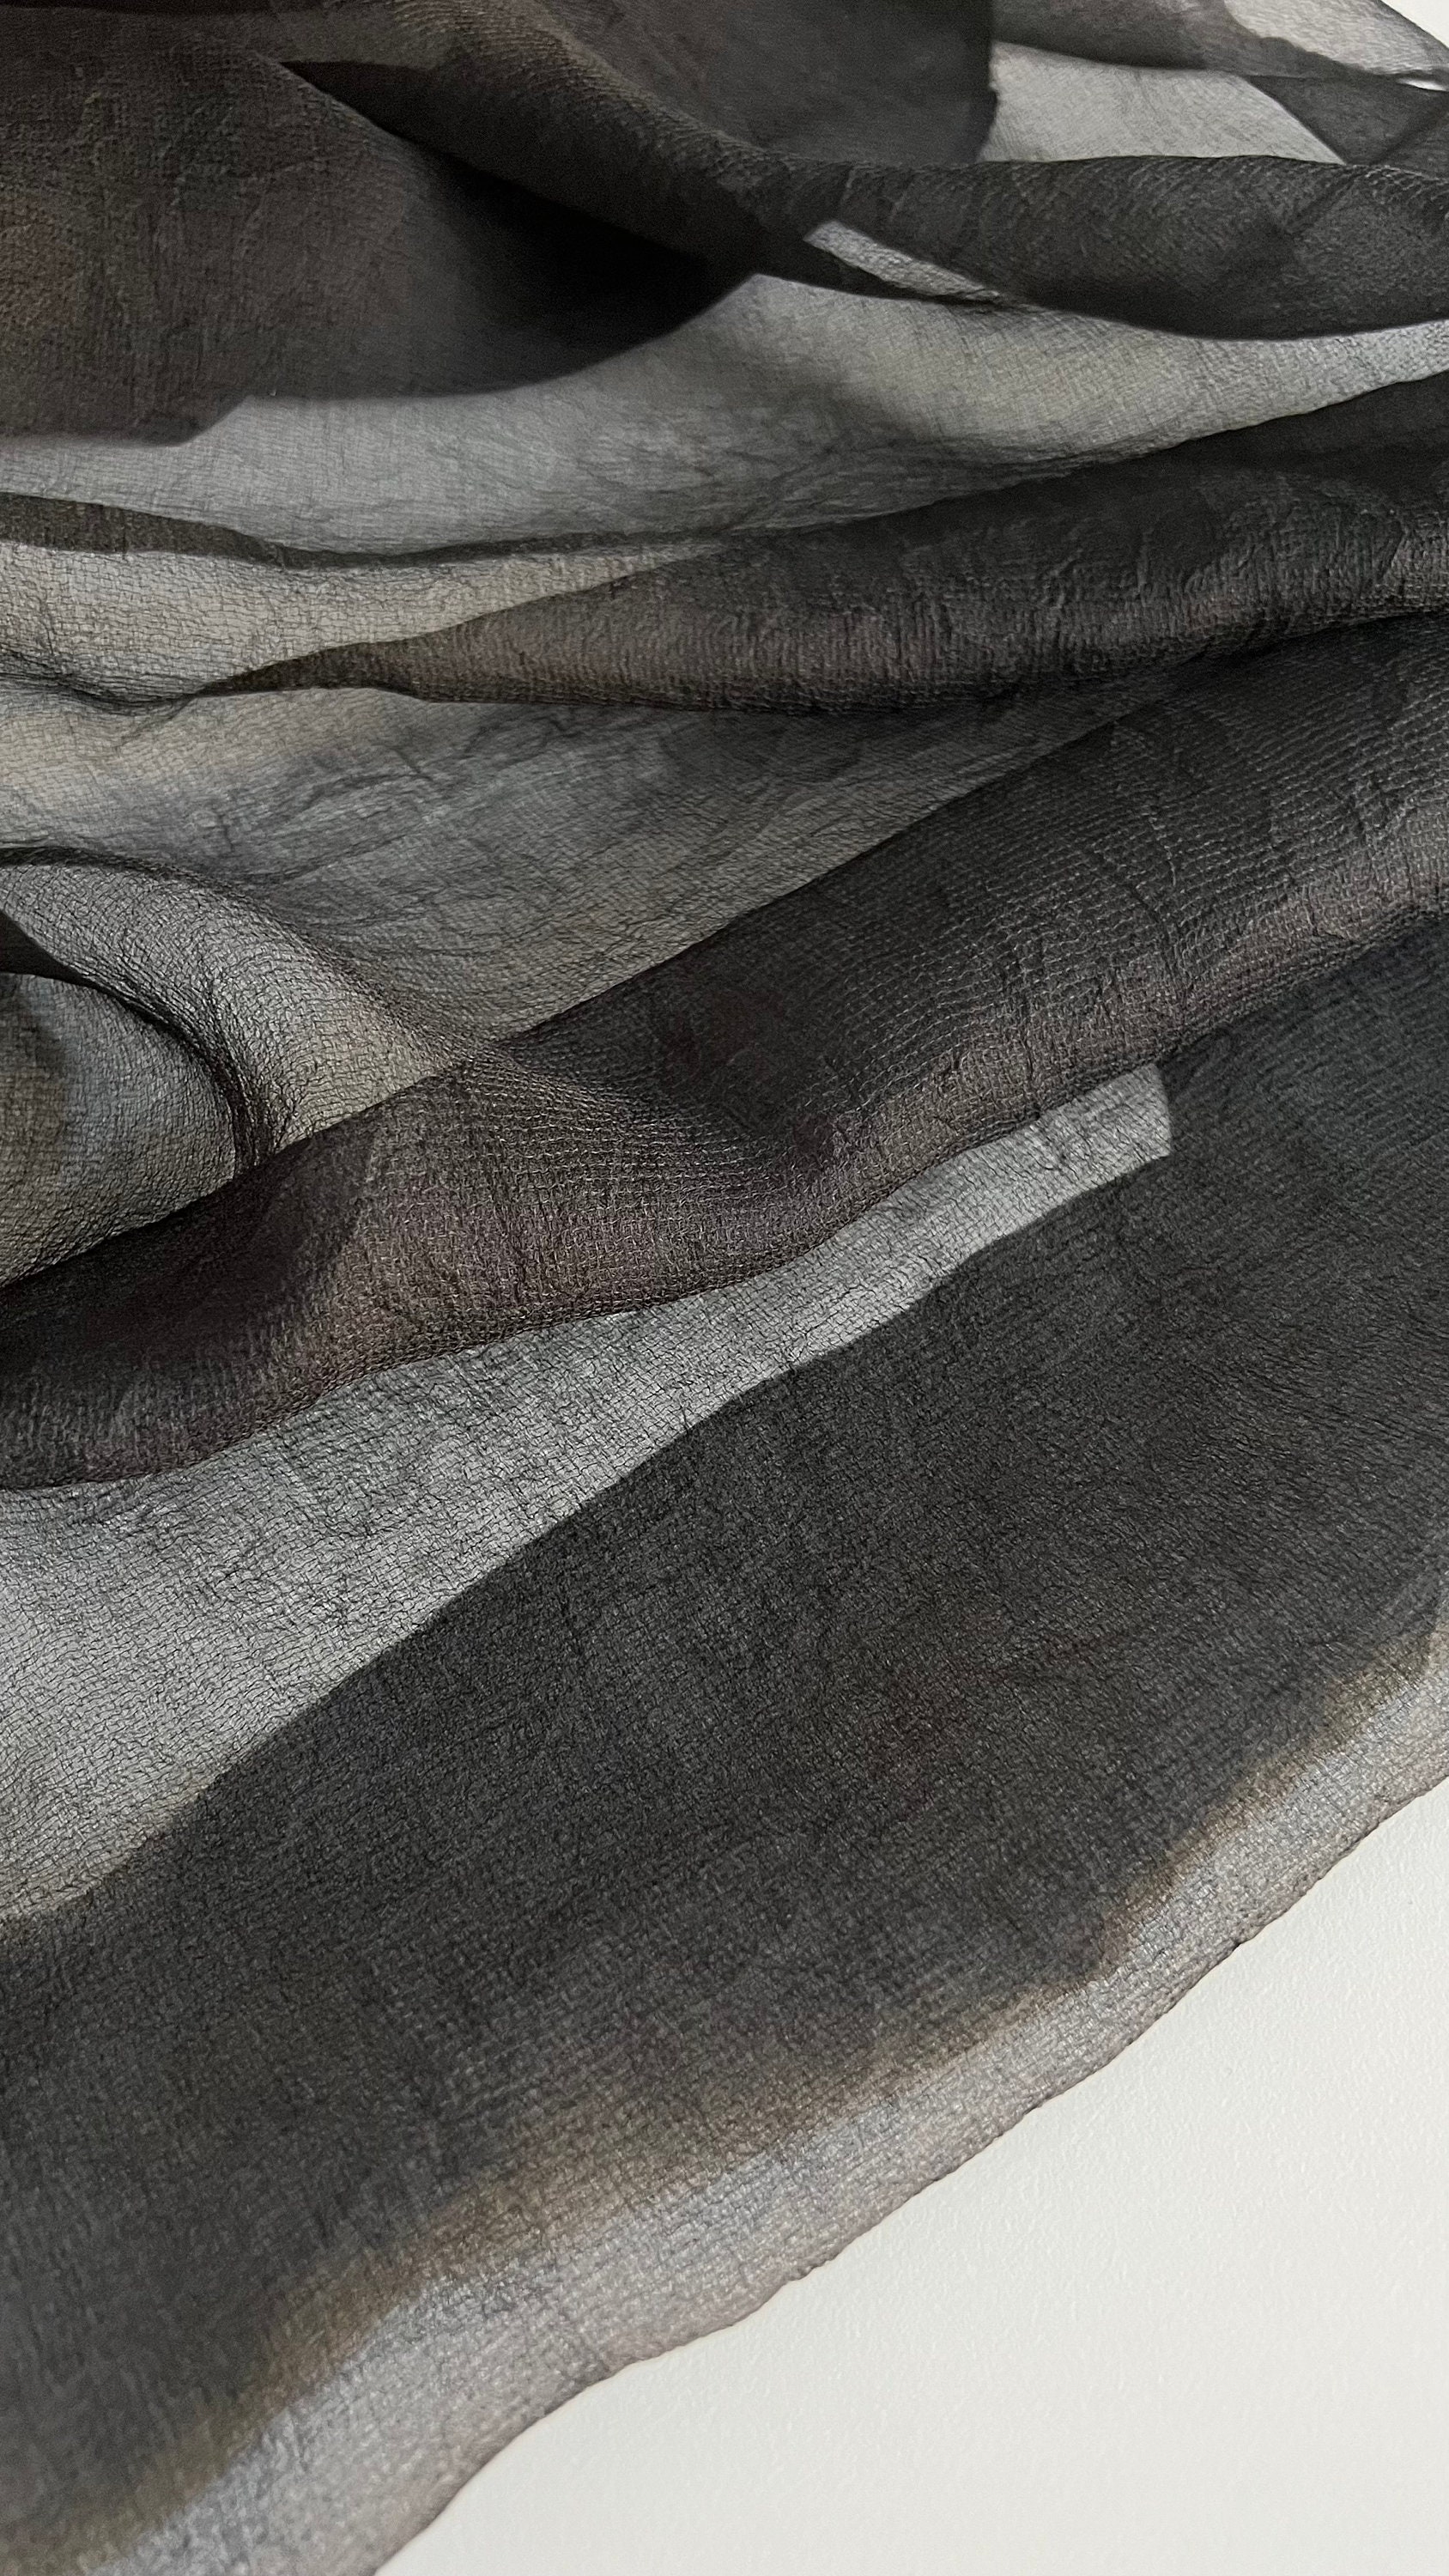 Silk Organza Fabric: 100% Silk Fabrics from France by Sfate&combier, SKU  00065581 at $80 — Buy Silk Fabrics Online